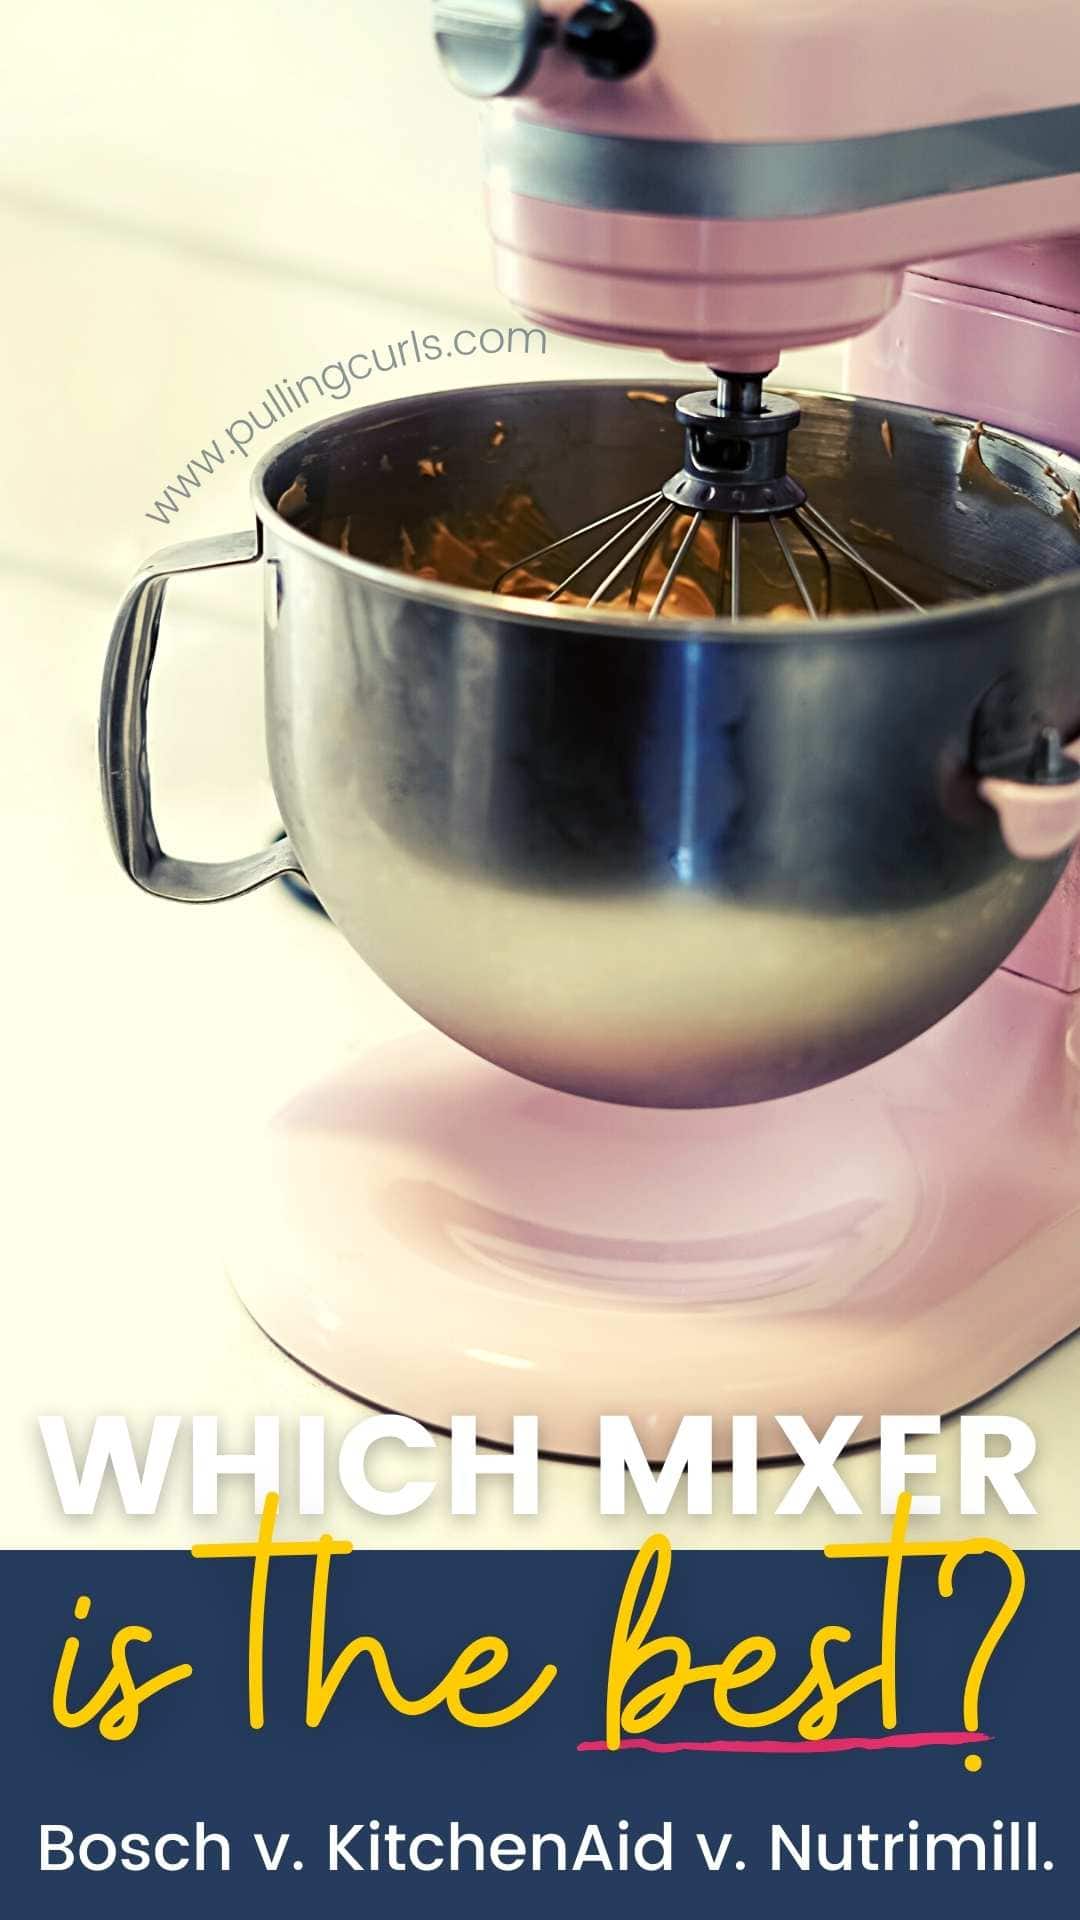 Bosch Universal Mixer vs Kitchenaid Mixer vs The Nutrimill Artiste Mixer